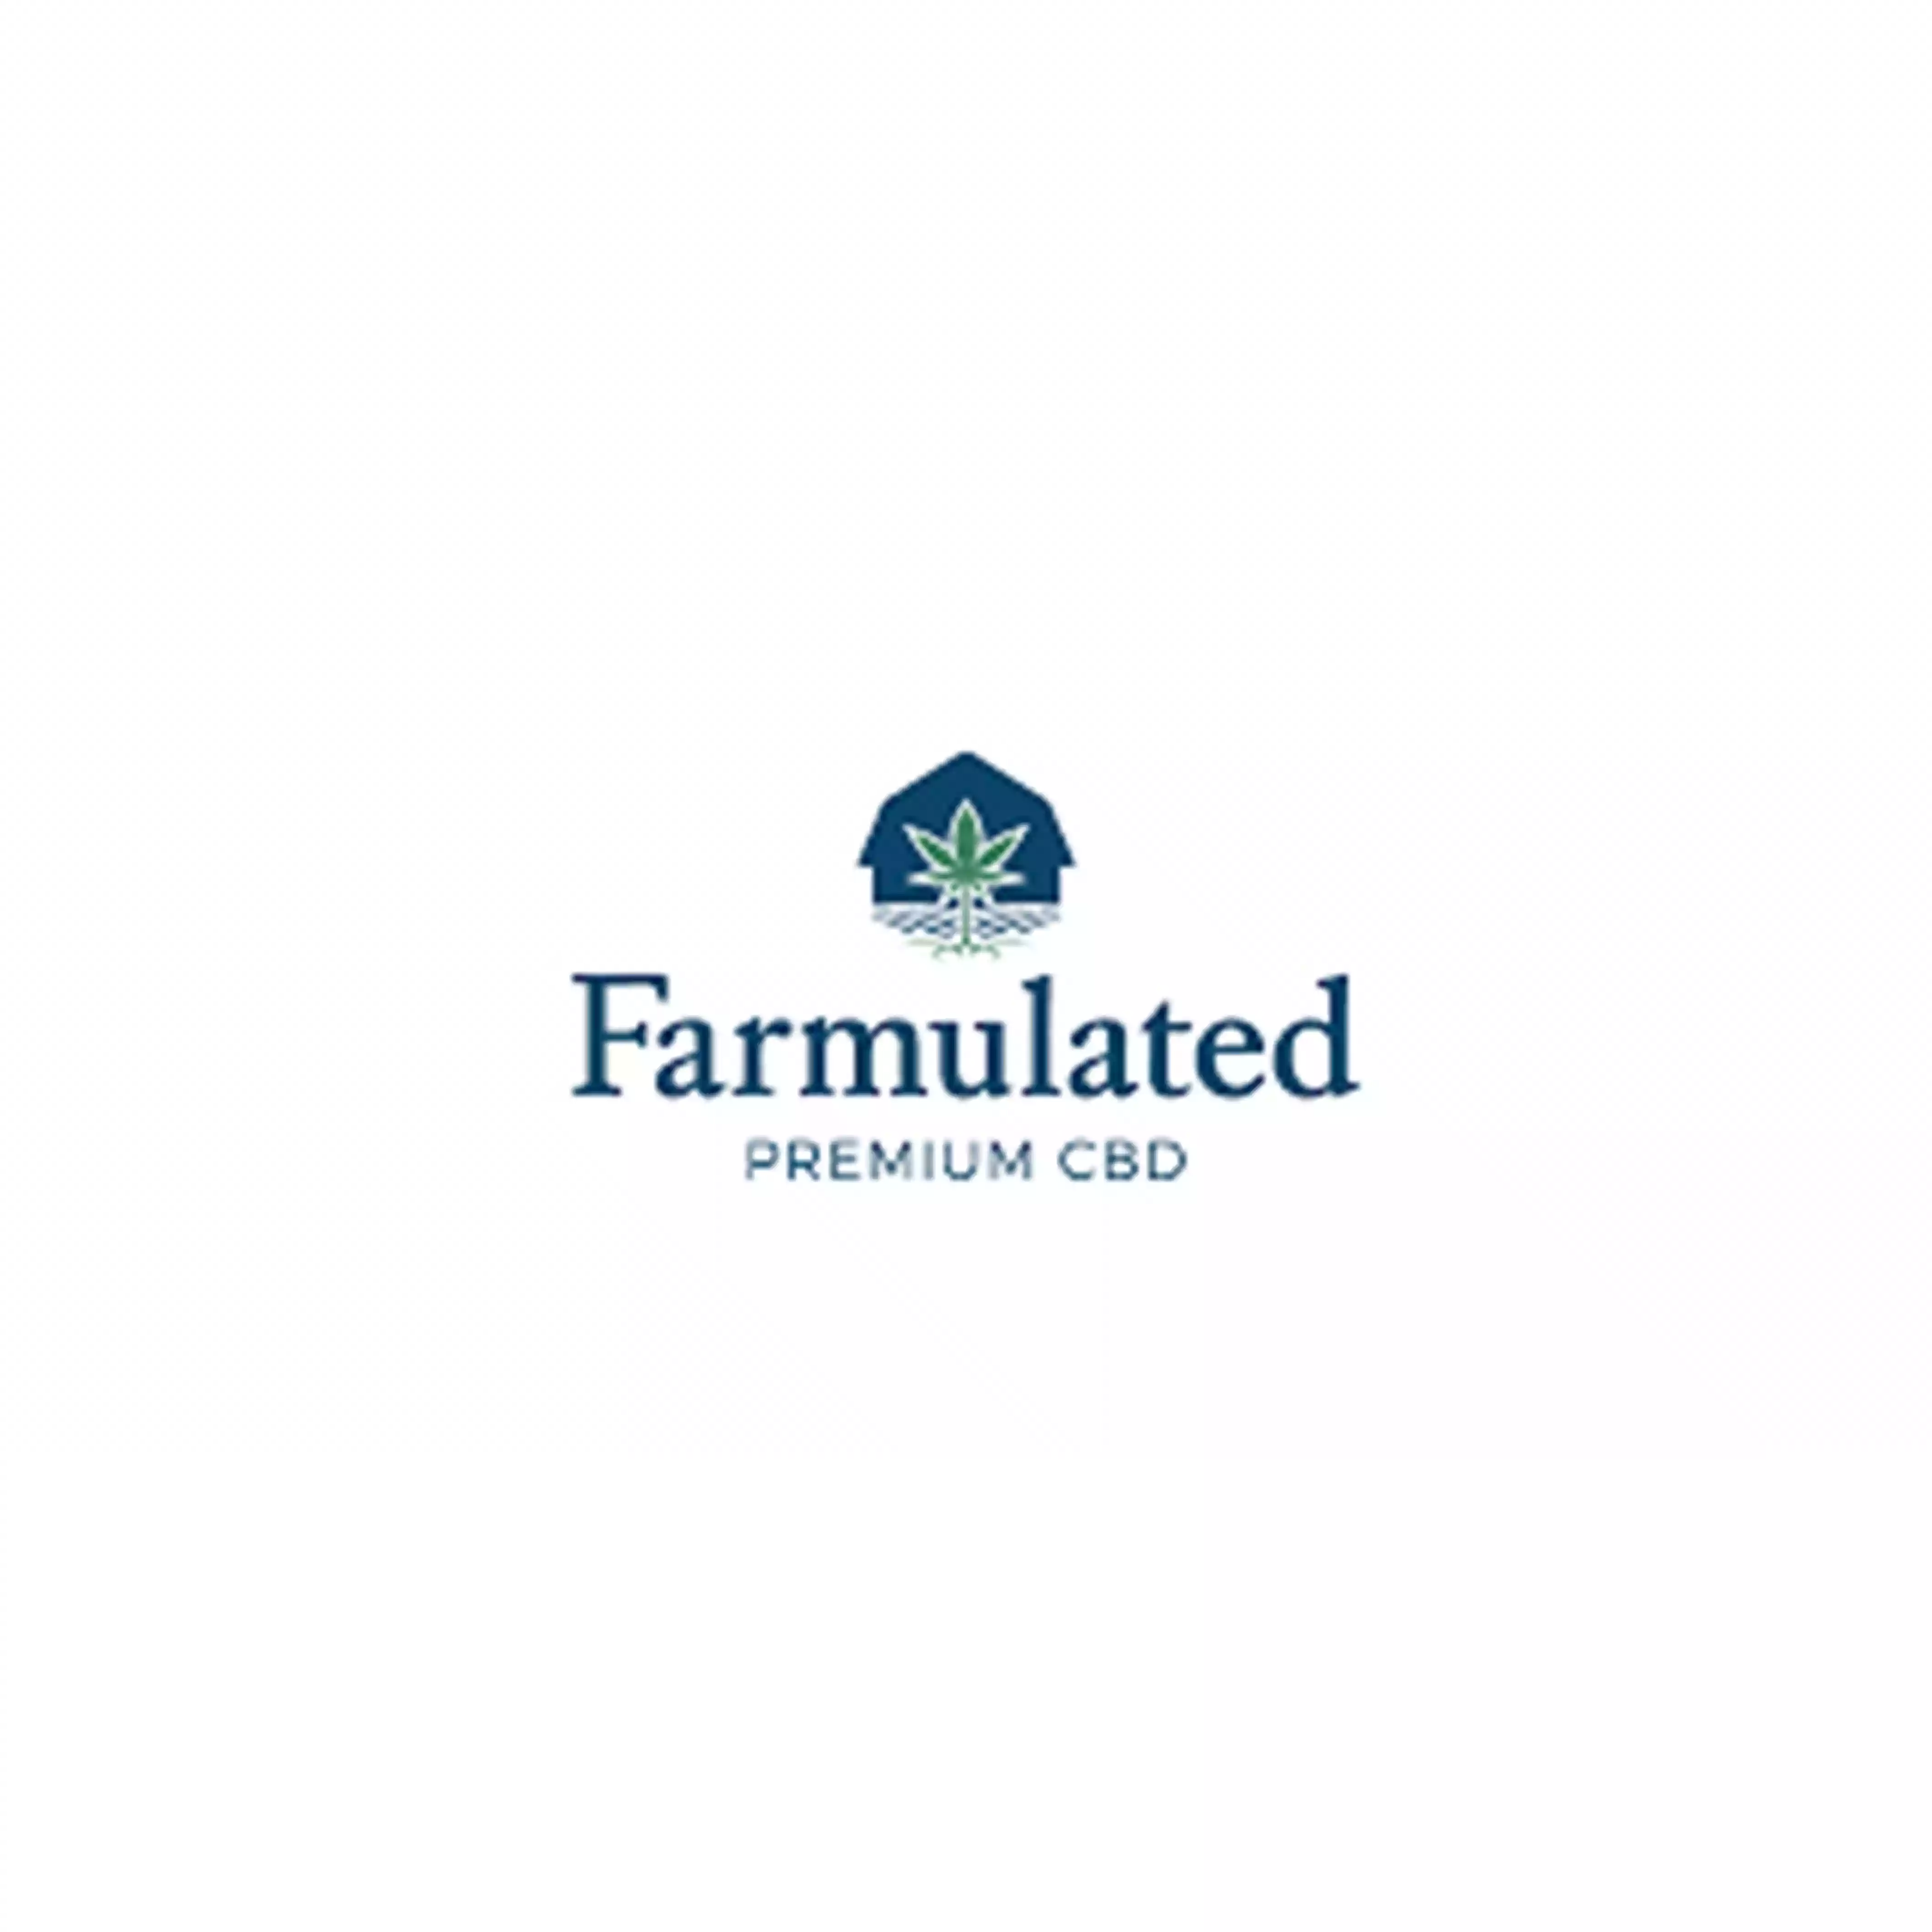 Farmulated logo